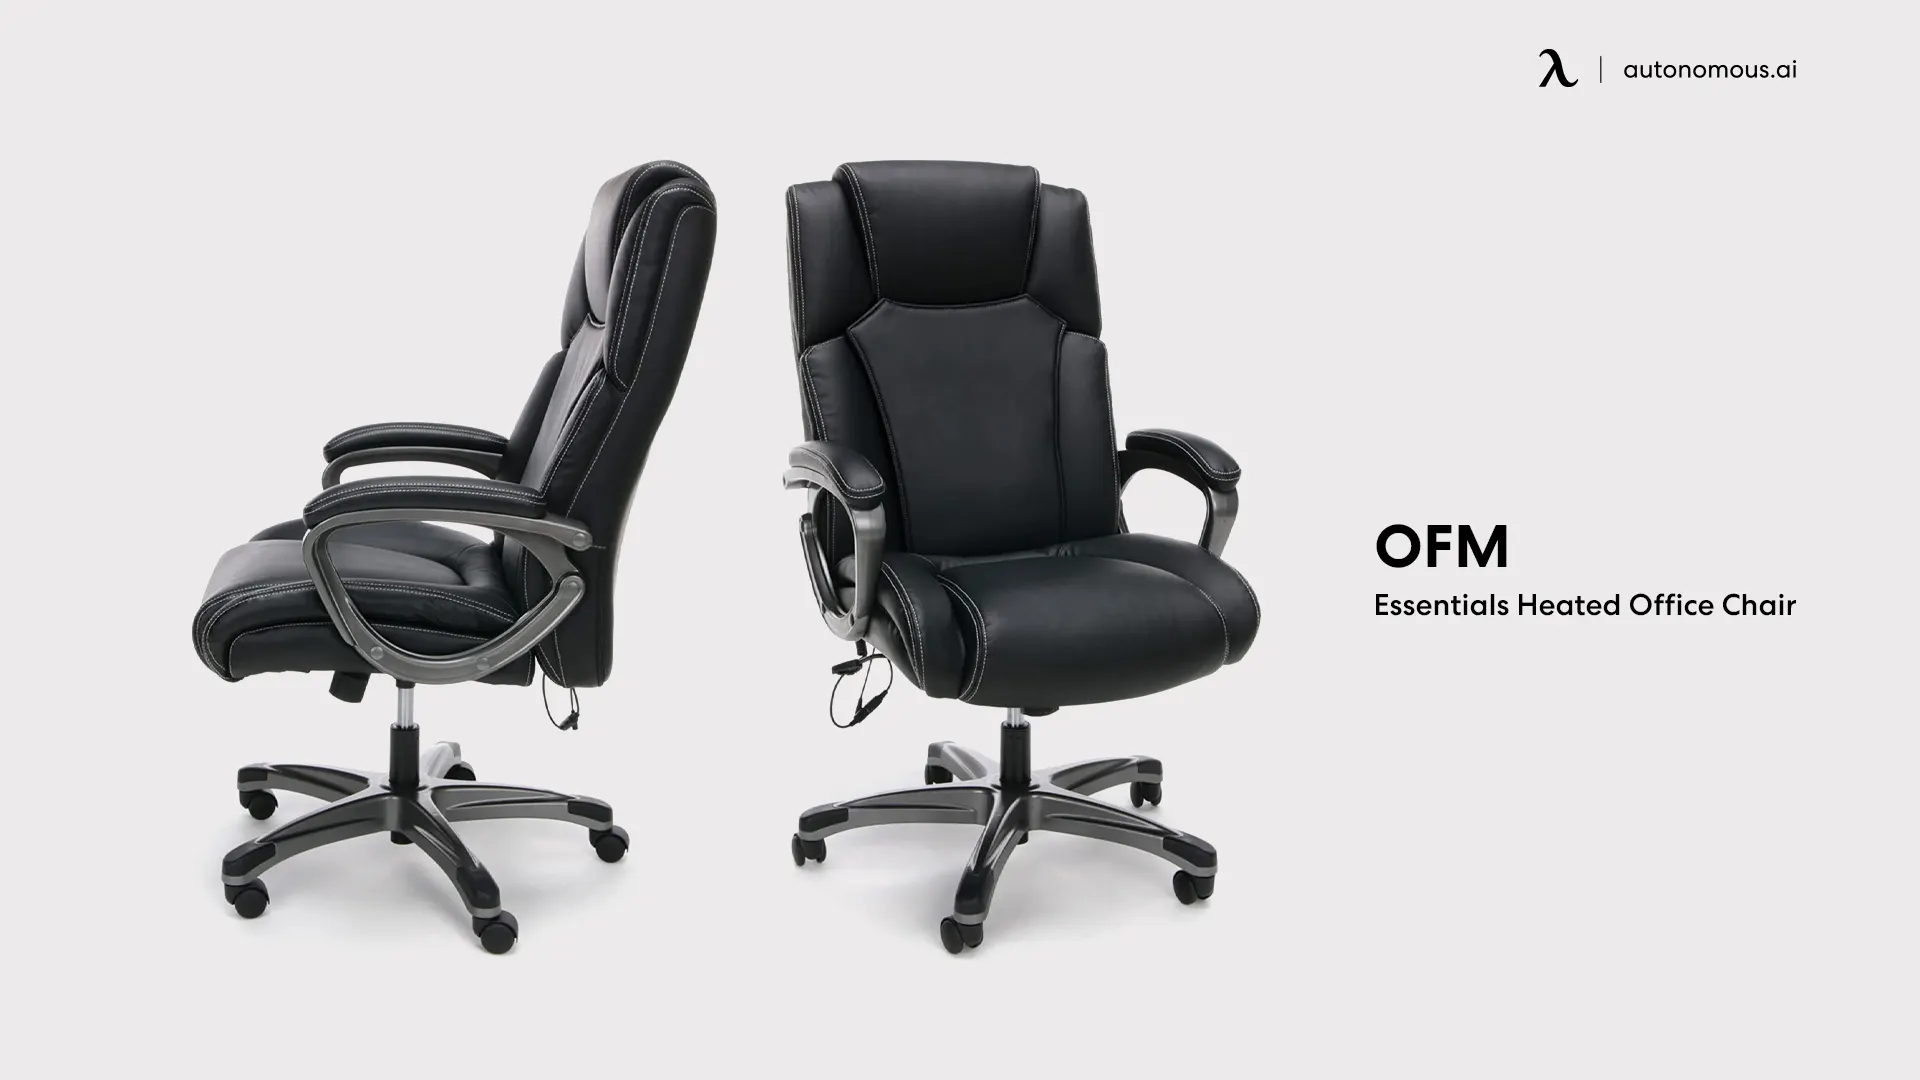 OFM Essentials Heated Office Chair